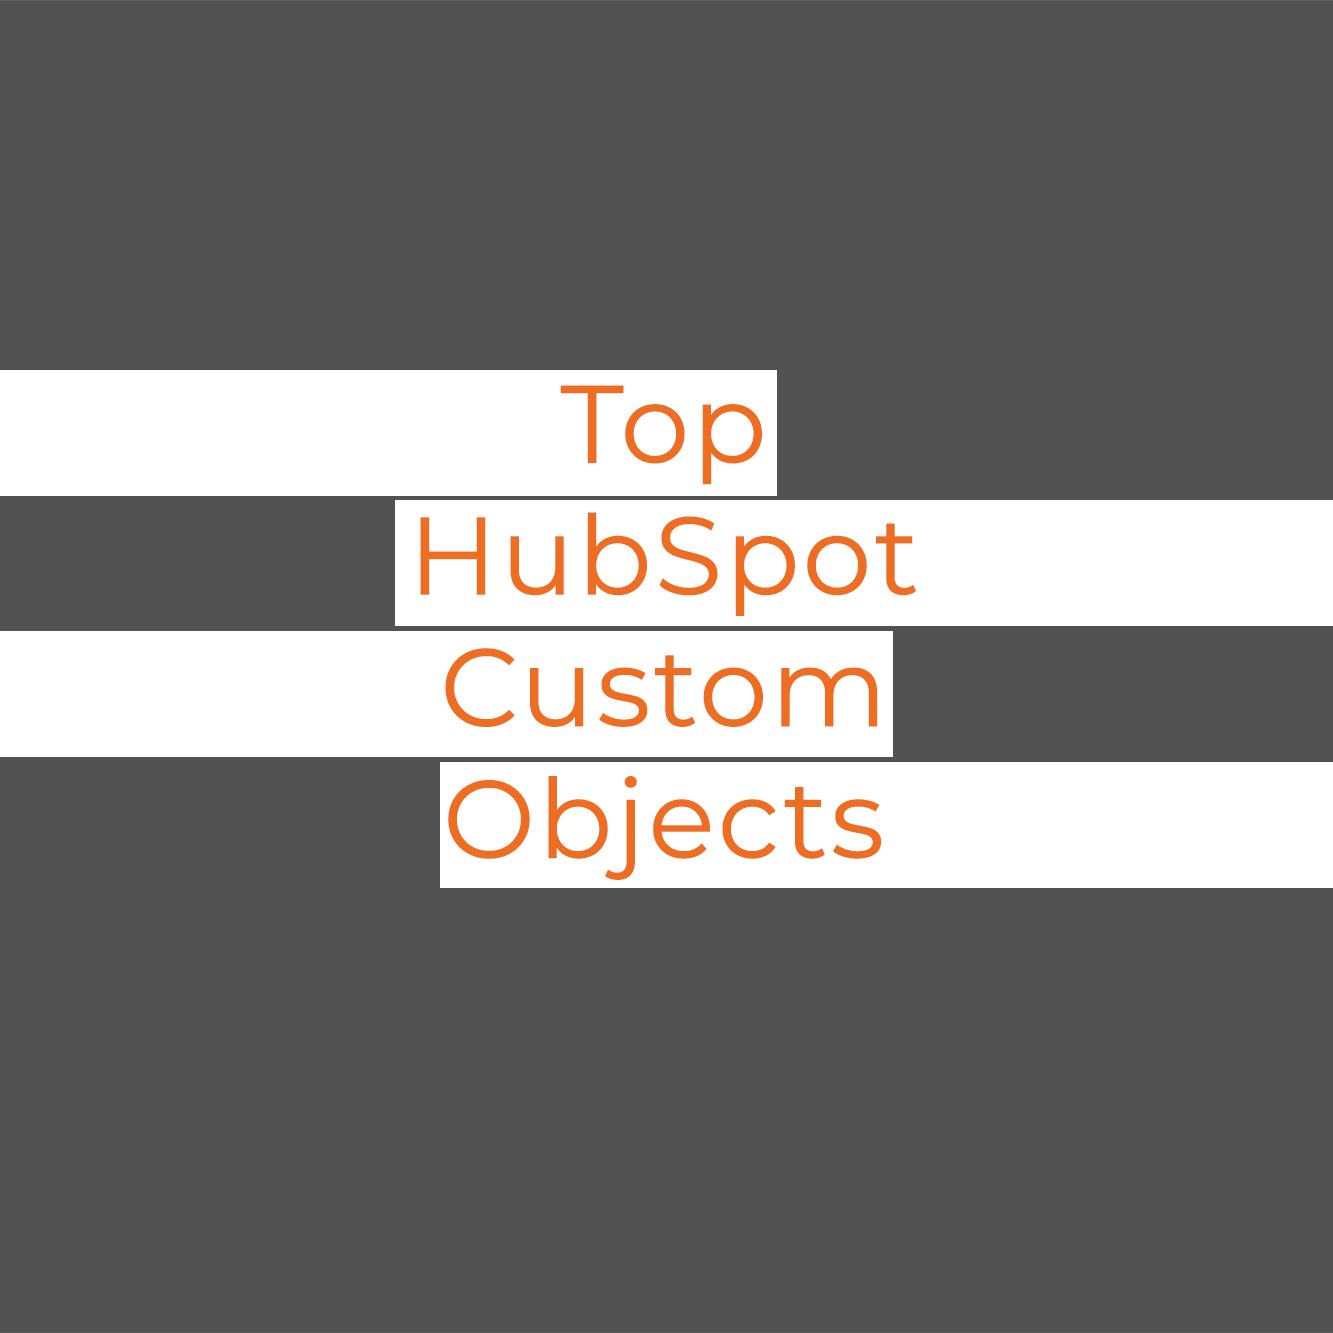 Top HubSpot custom objects